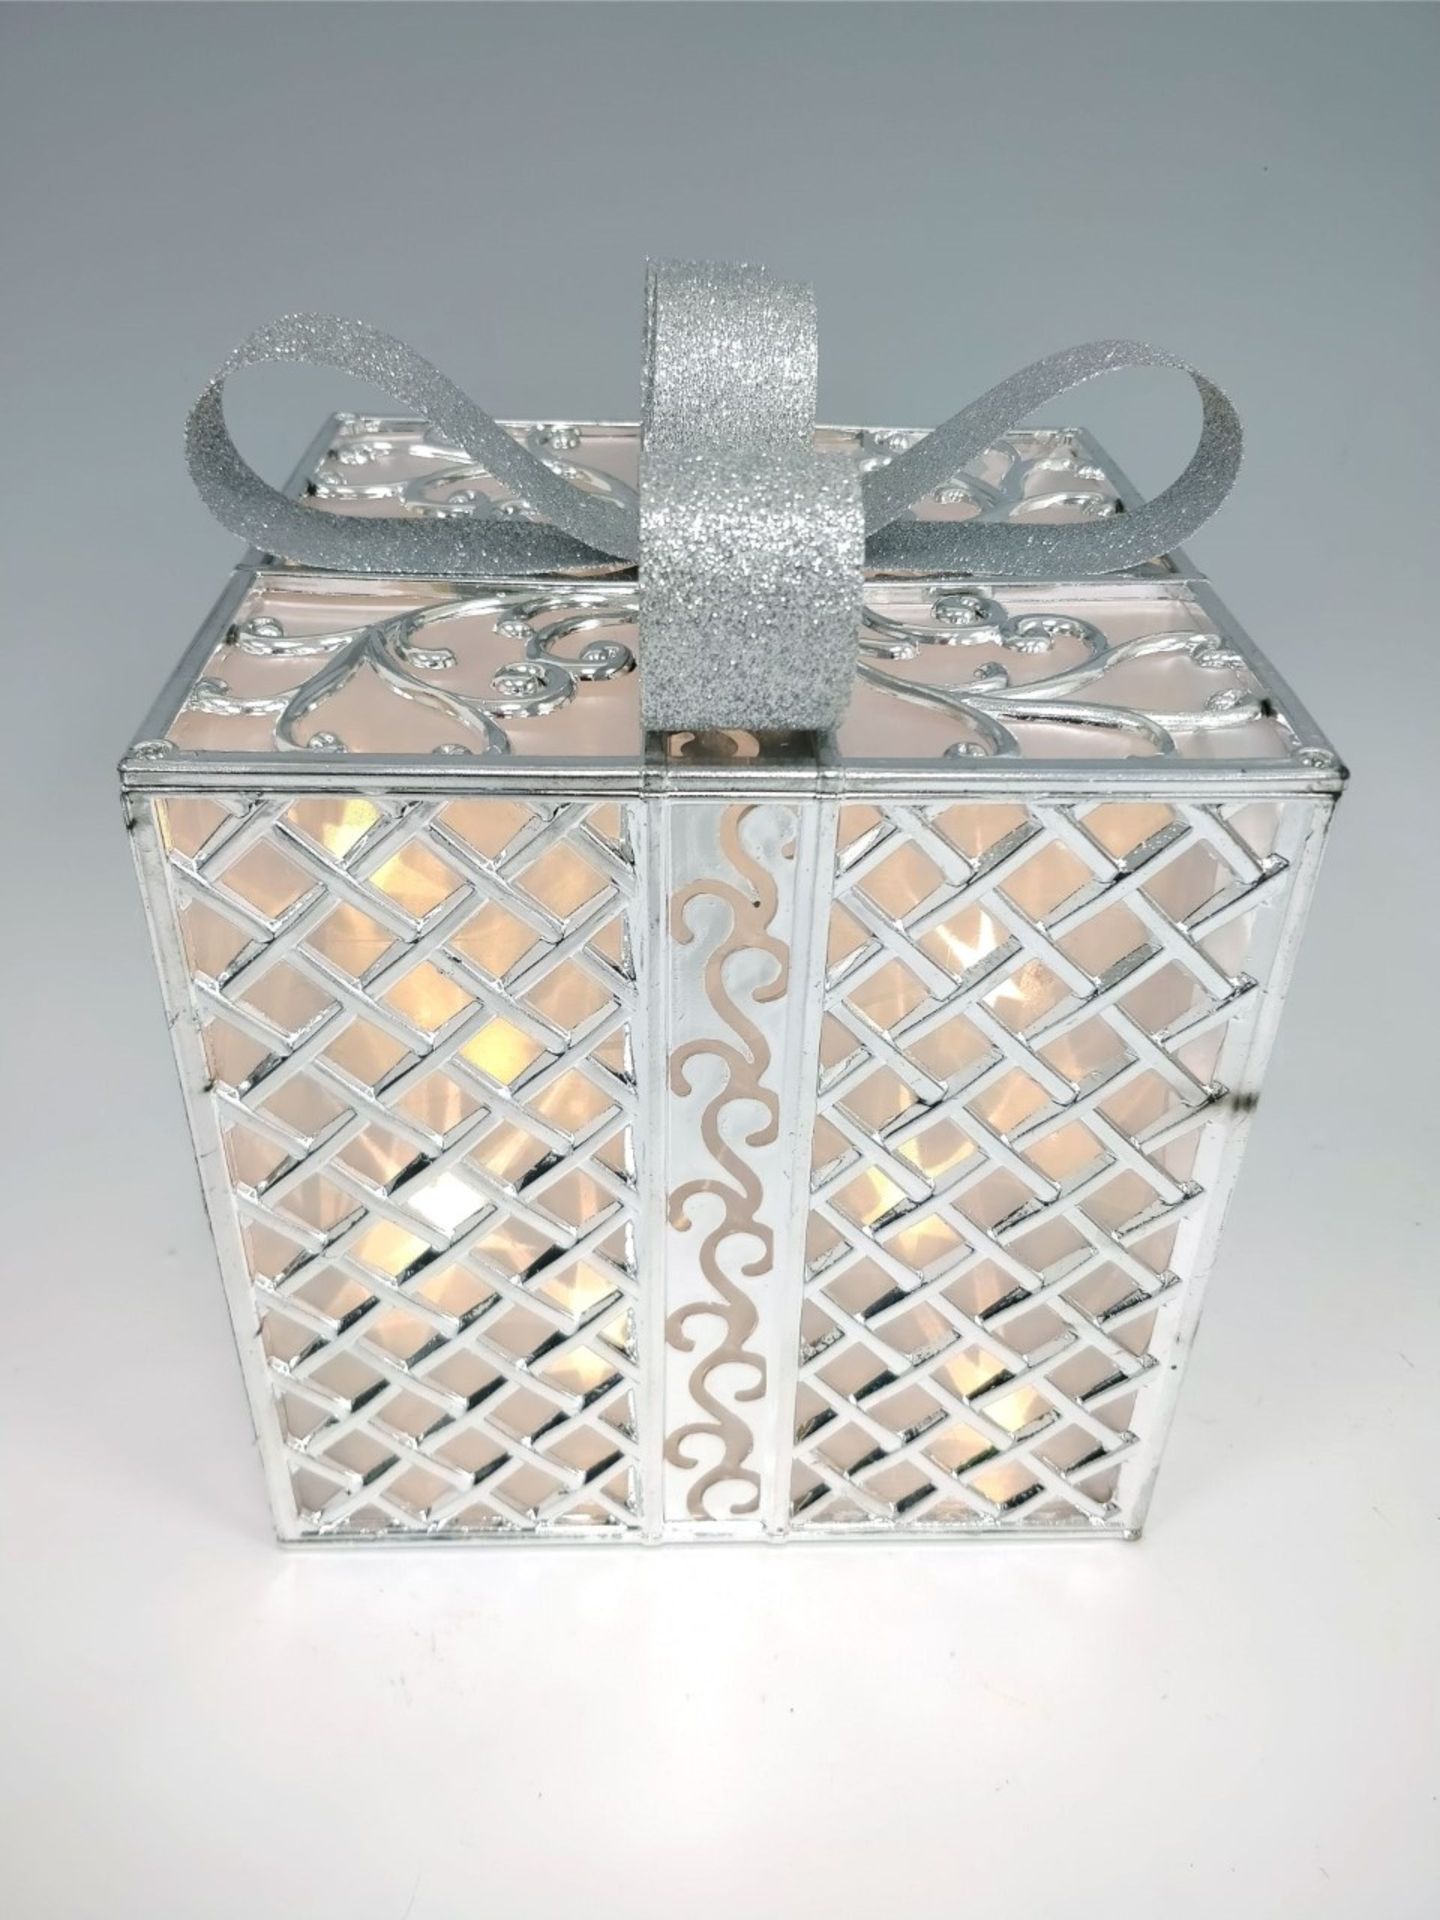 1. x Cartons containing 8pcs Christmas Gift Box design LED light up Christmas decoration - Brand new